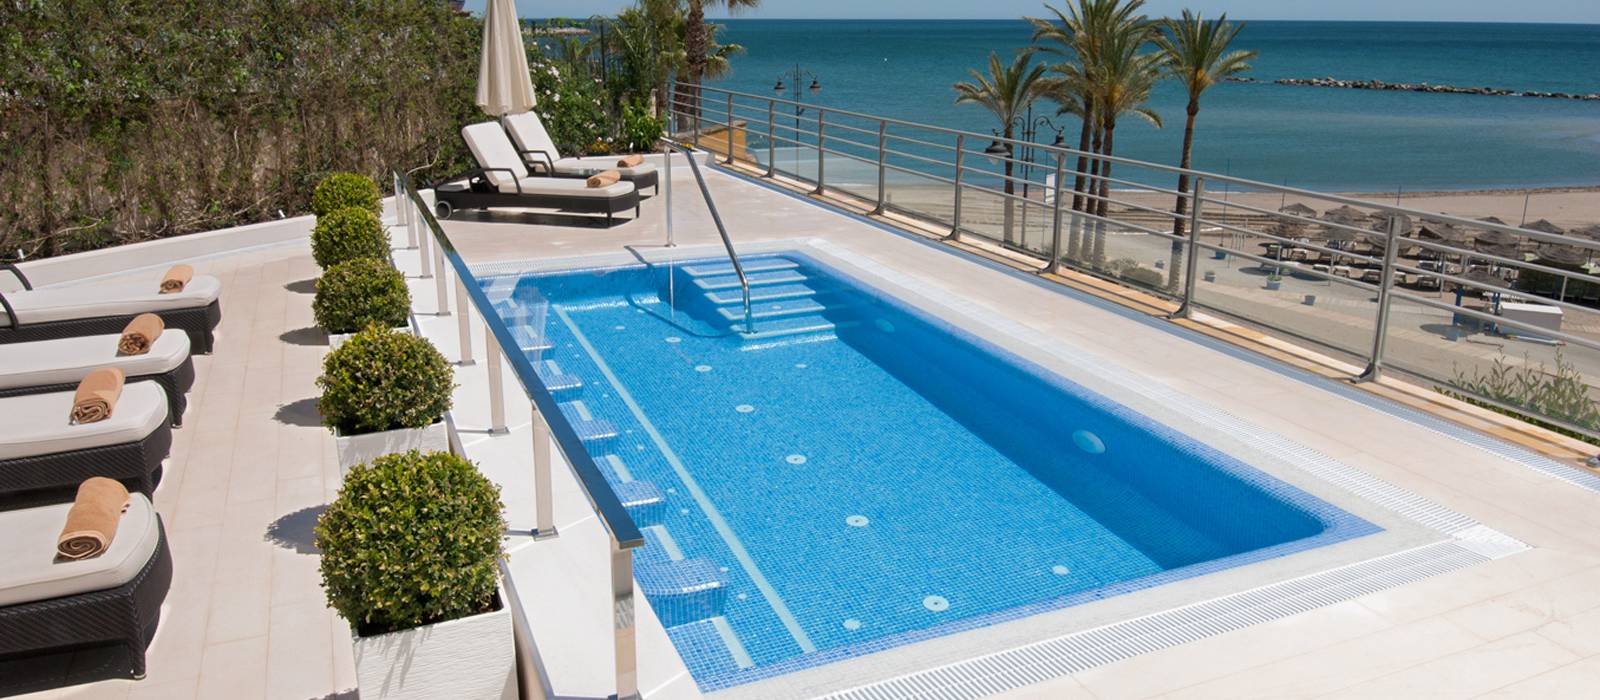 Hotel Vincci Aleysa Boutique&Spa - Piscina e piscina esterna con idromassaggio